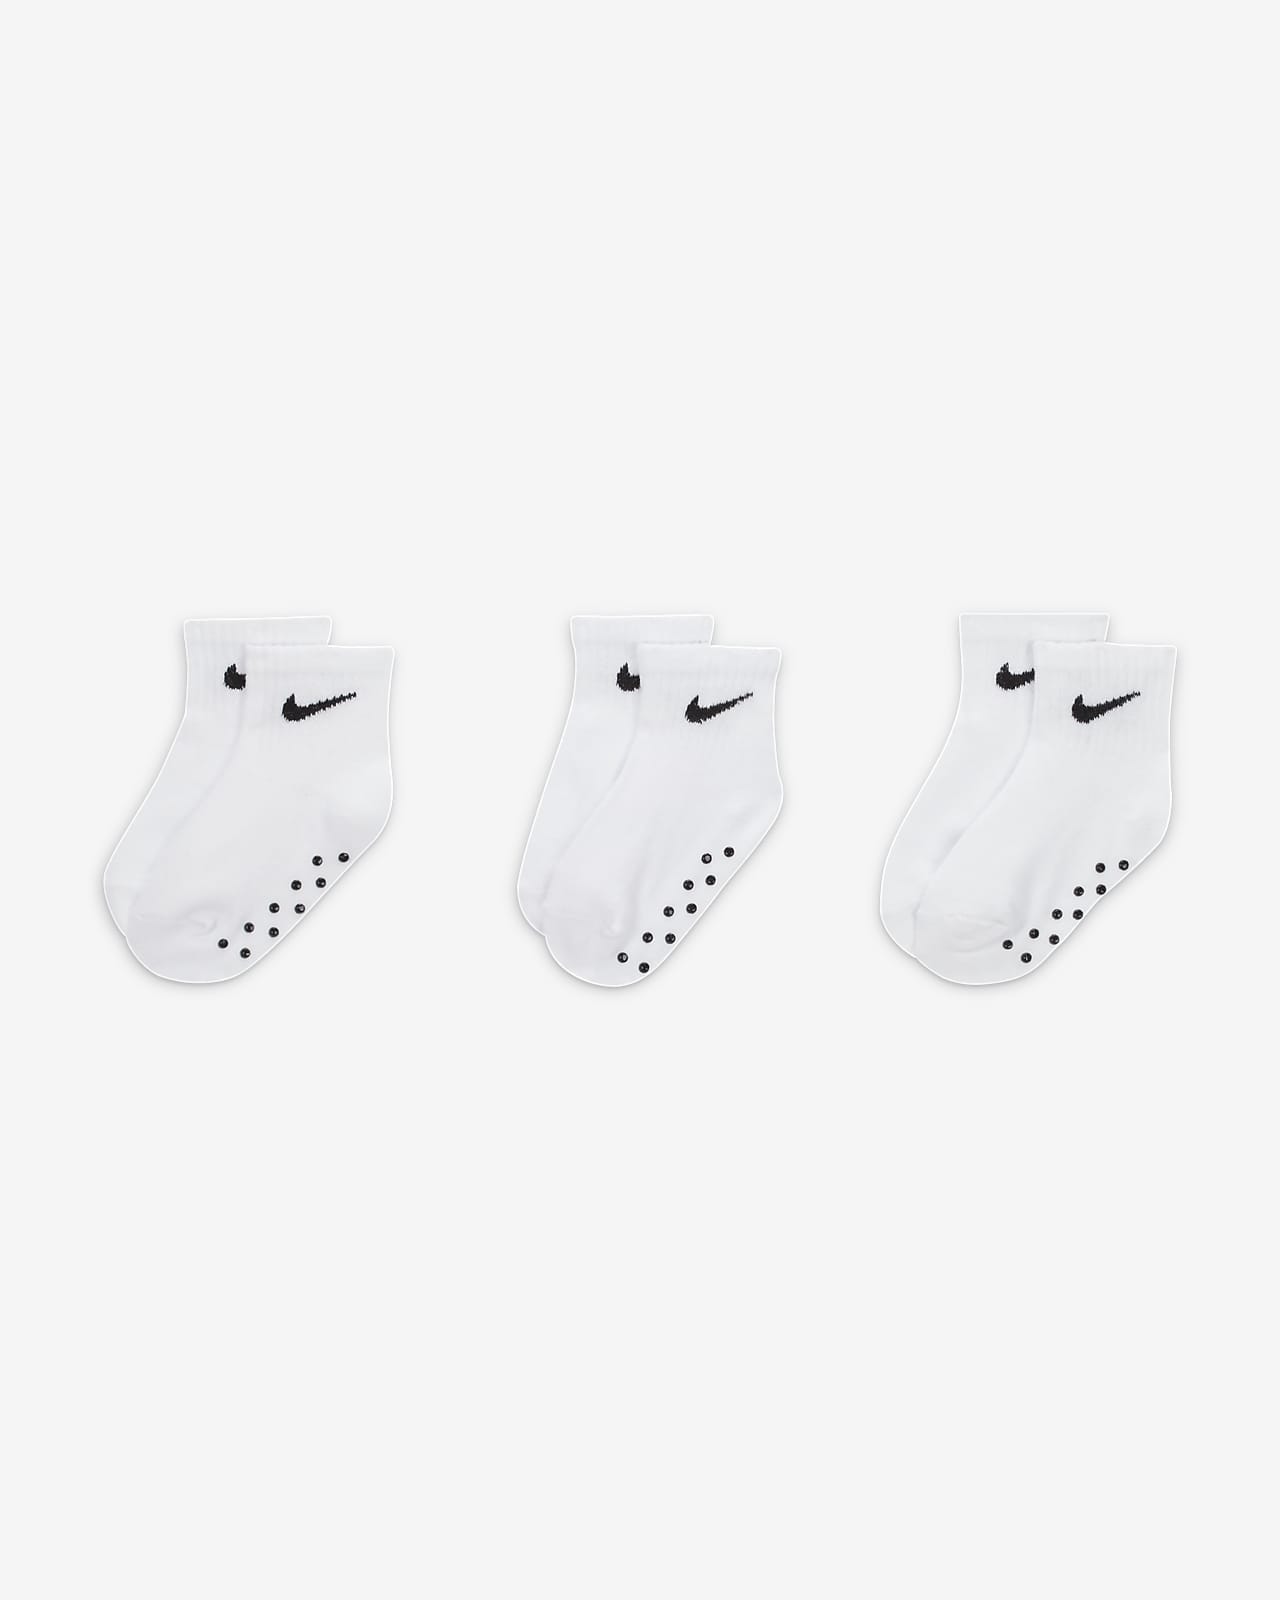 Nike Core Swoosh Baby (6-12M) Gripper Socks Box Set (3 Pairs)